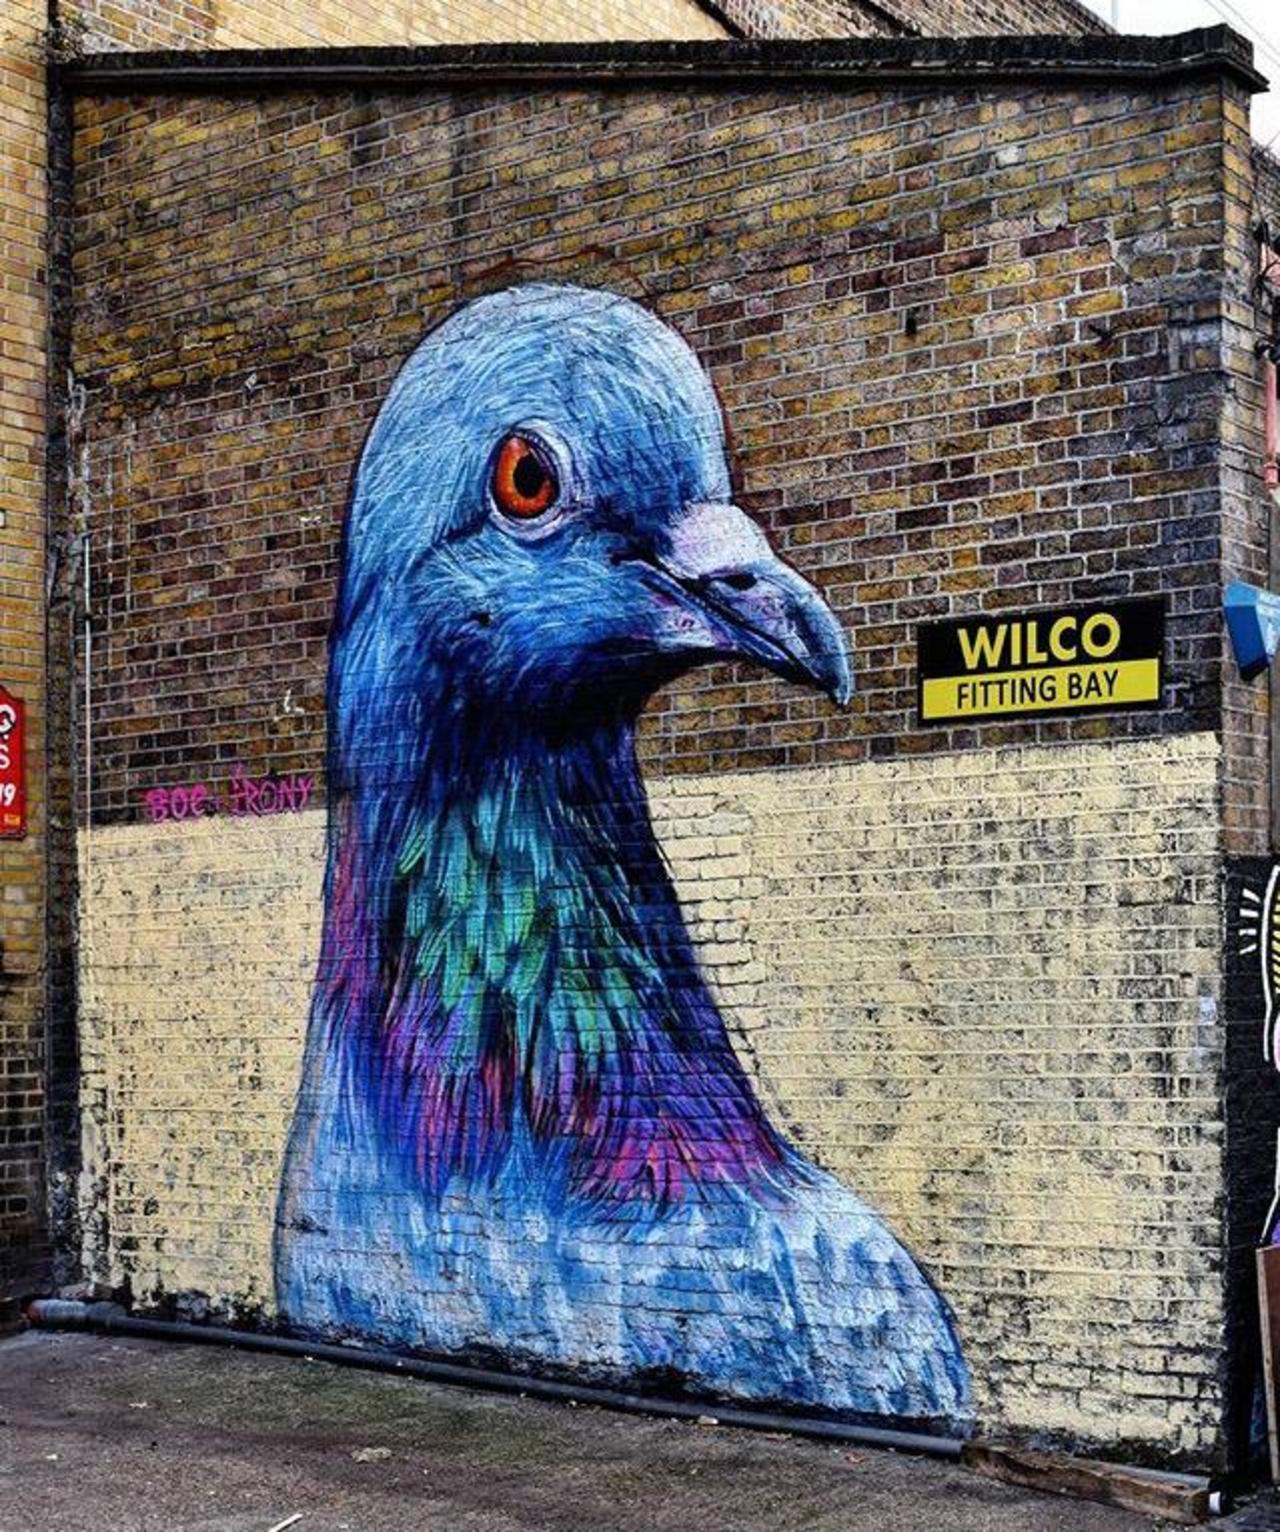 JewelNiles1: Street Art by Placee Boe & whoamirony in London 

#art #graffiti #mural #streetart http://t.co/HrCe9a5MpP